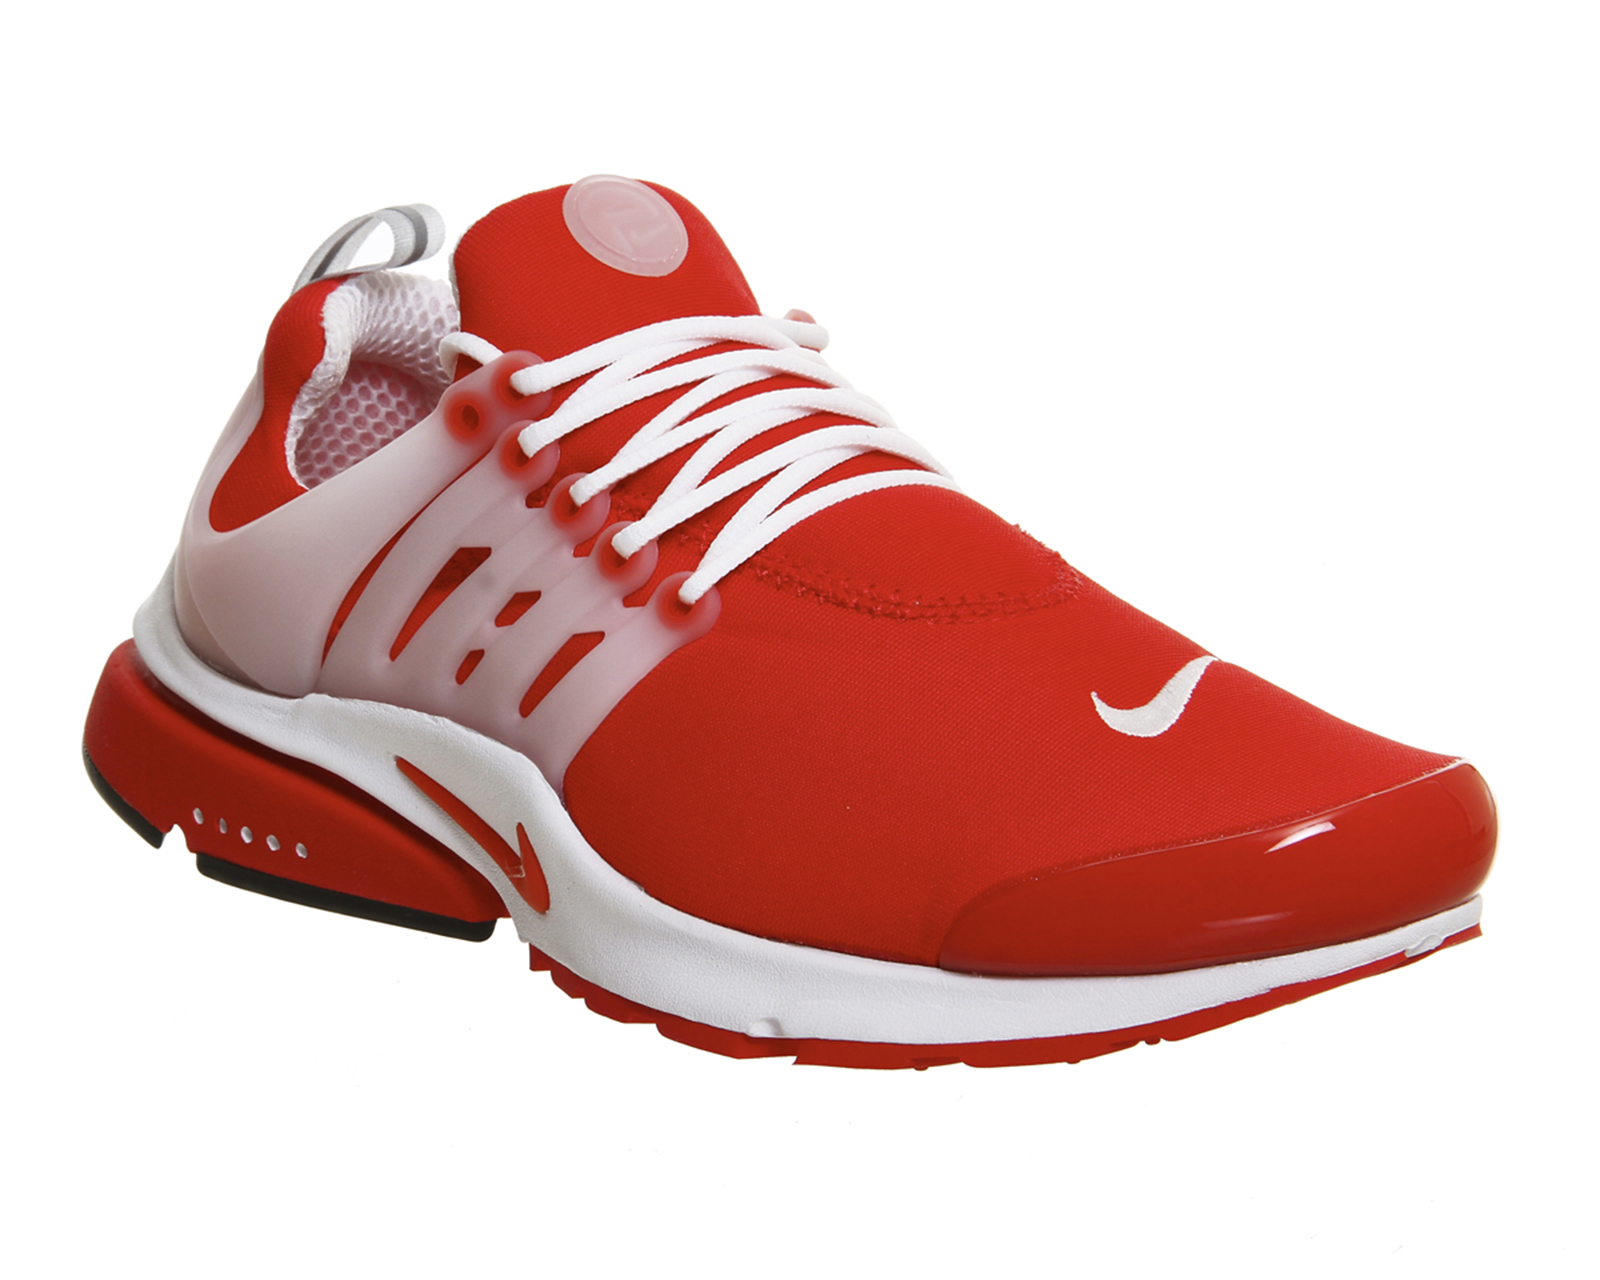 Nike Air Presto F Red White - His trainers